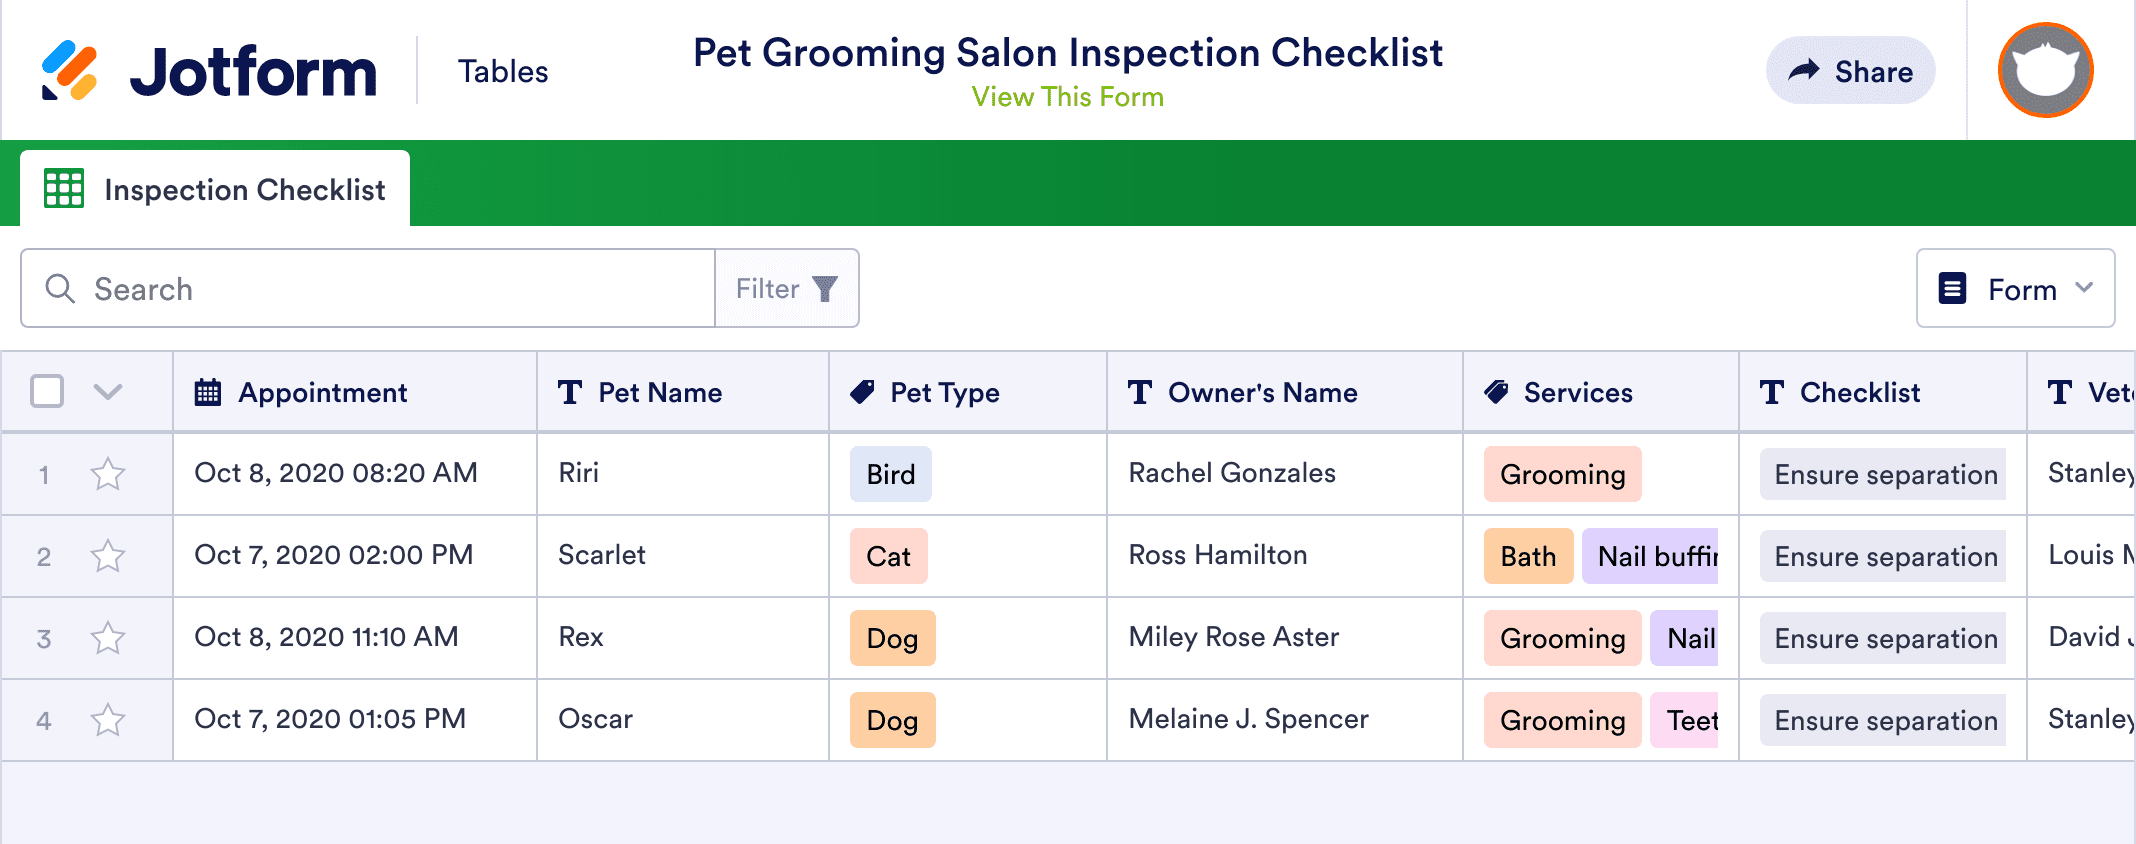 Pet Grooming Salon Inspection Checklist